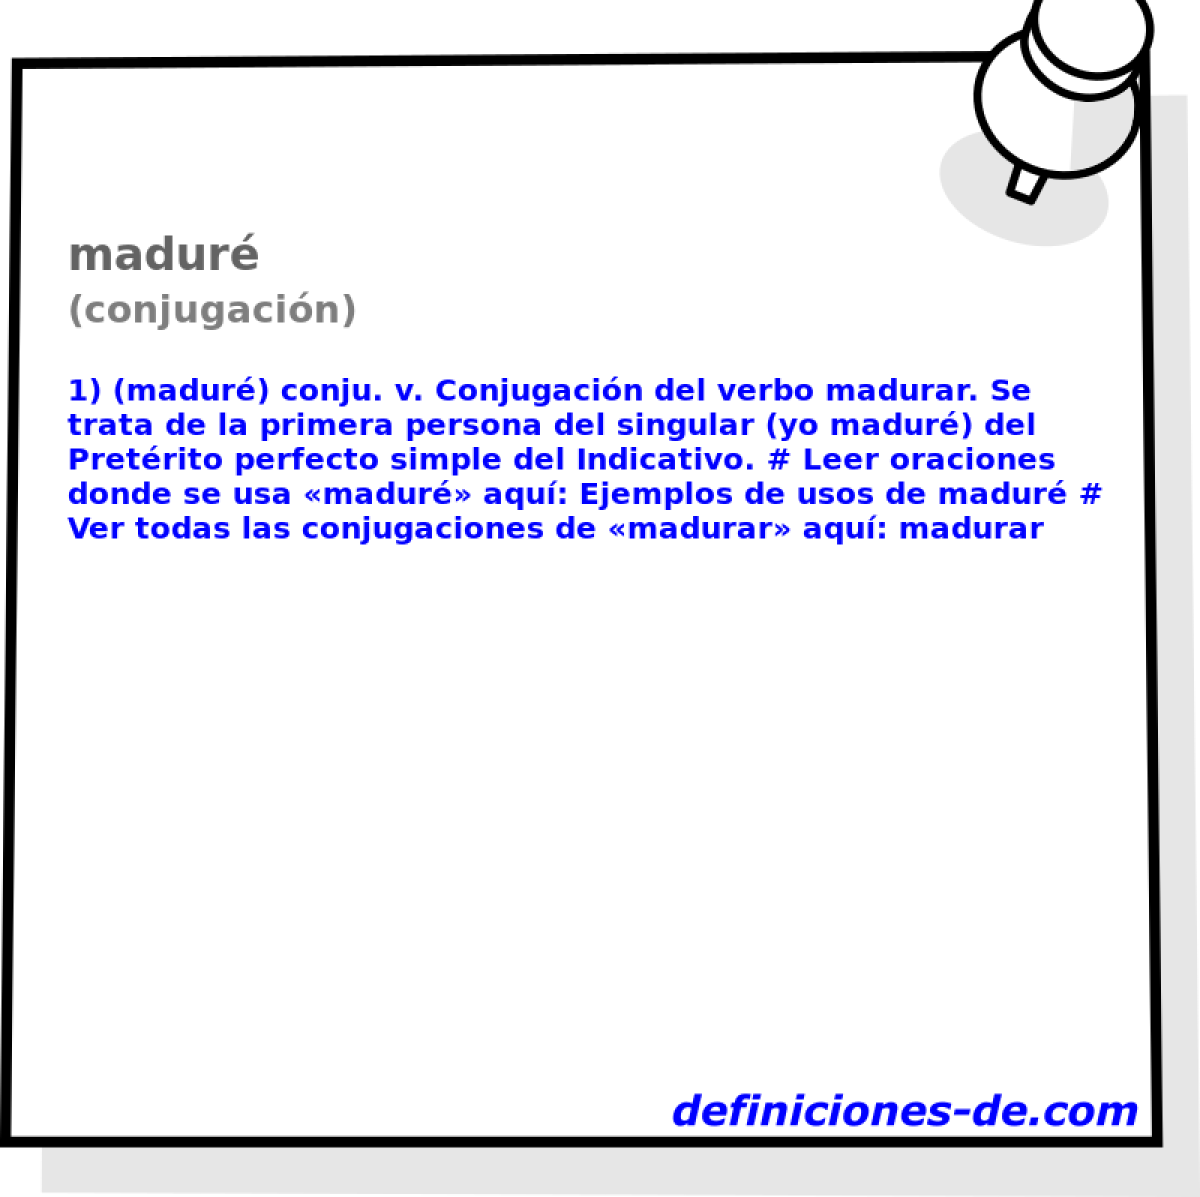 madur (conjugacin)